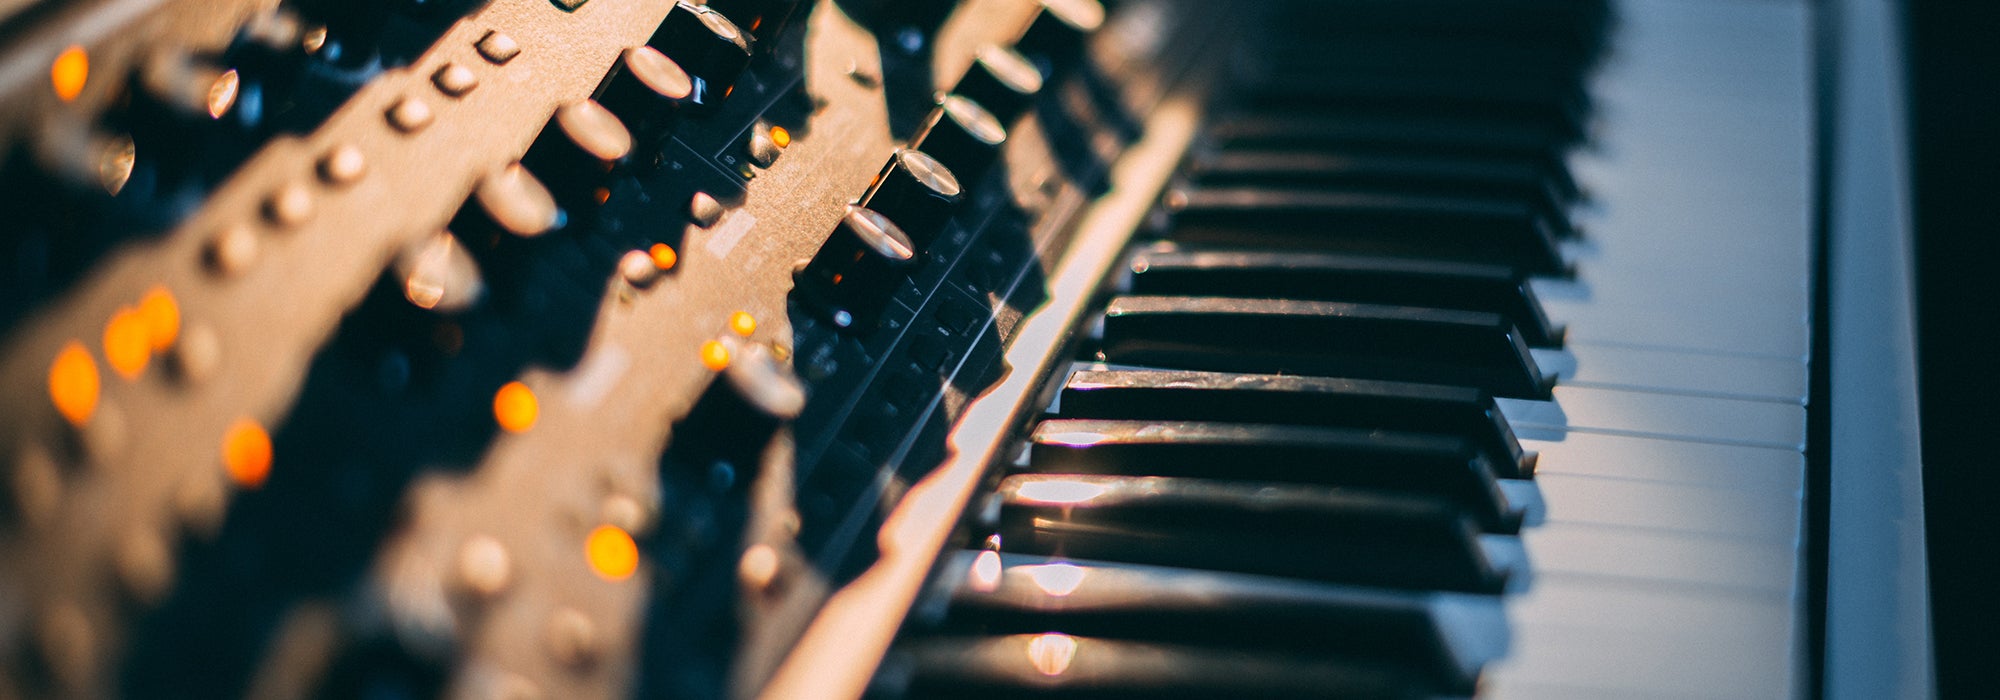 music industry keyboard